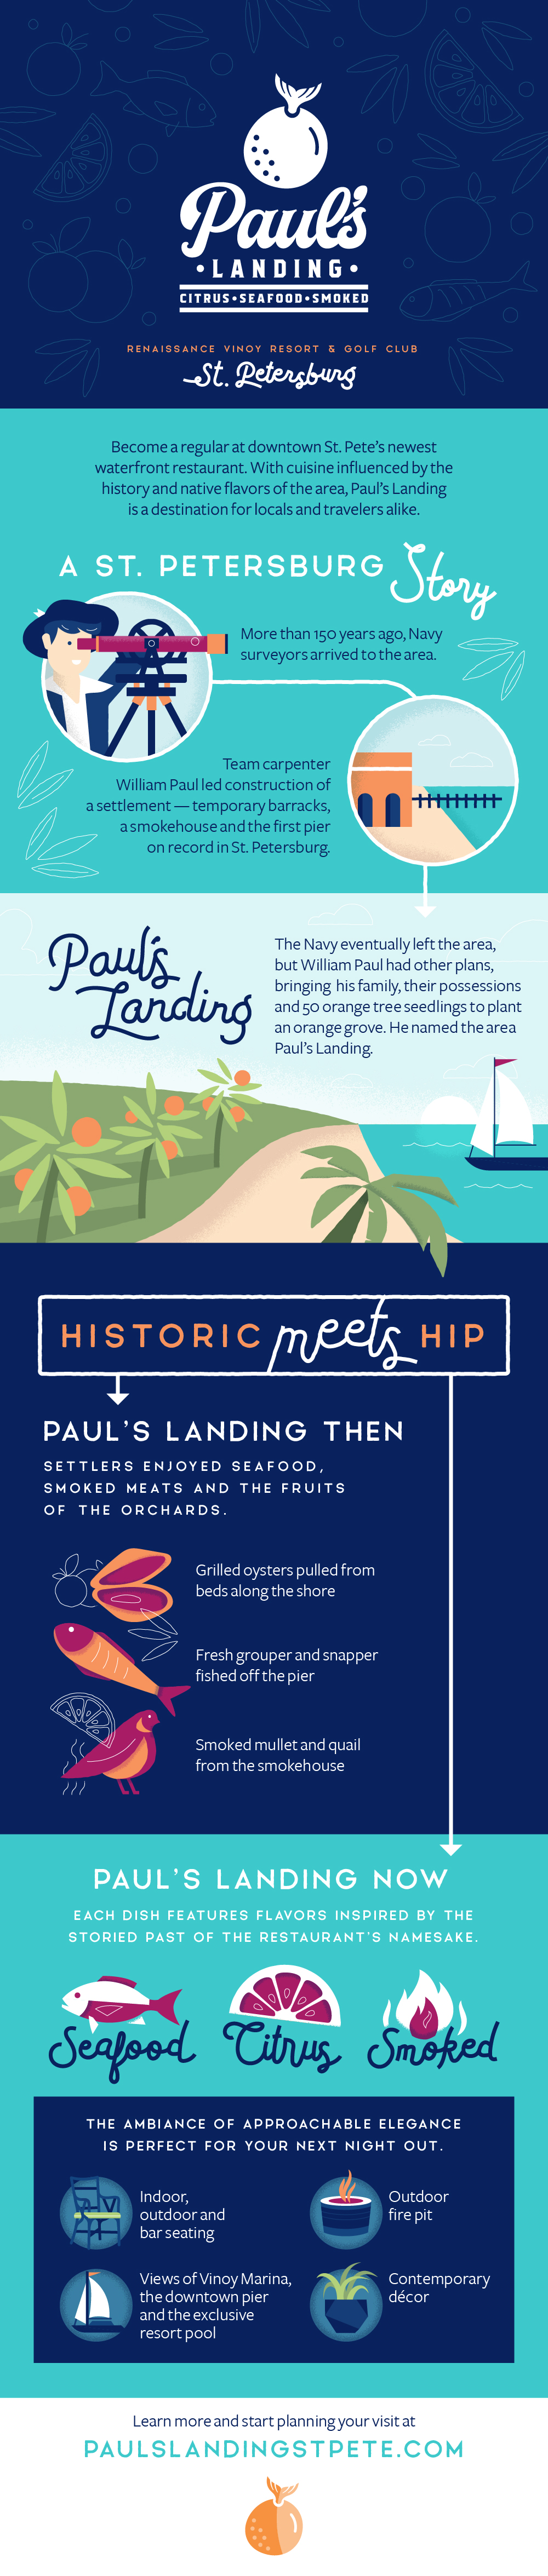 Paul’s Landing: A New St. Pete Staple